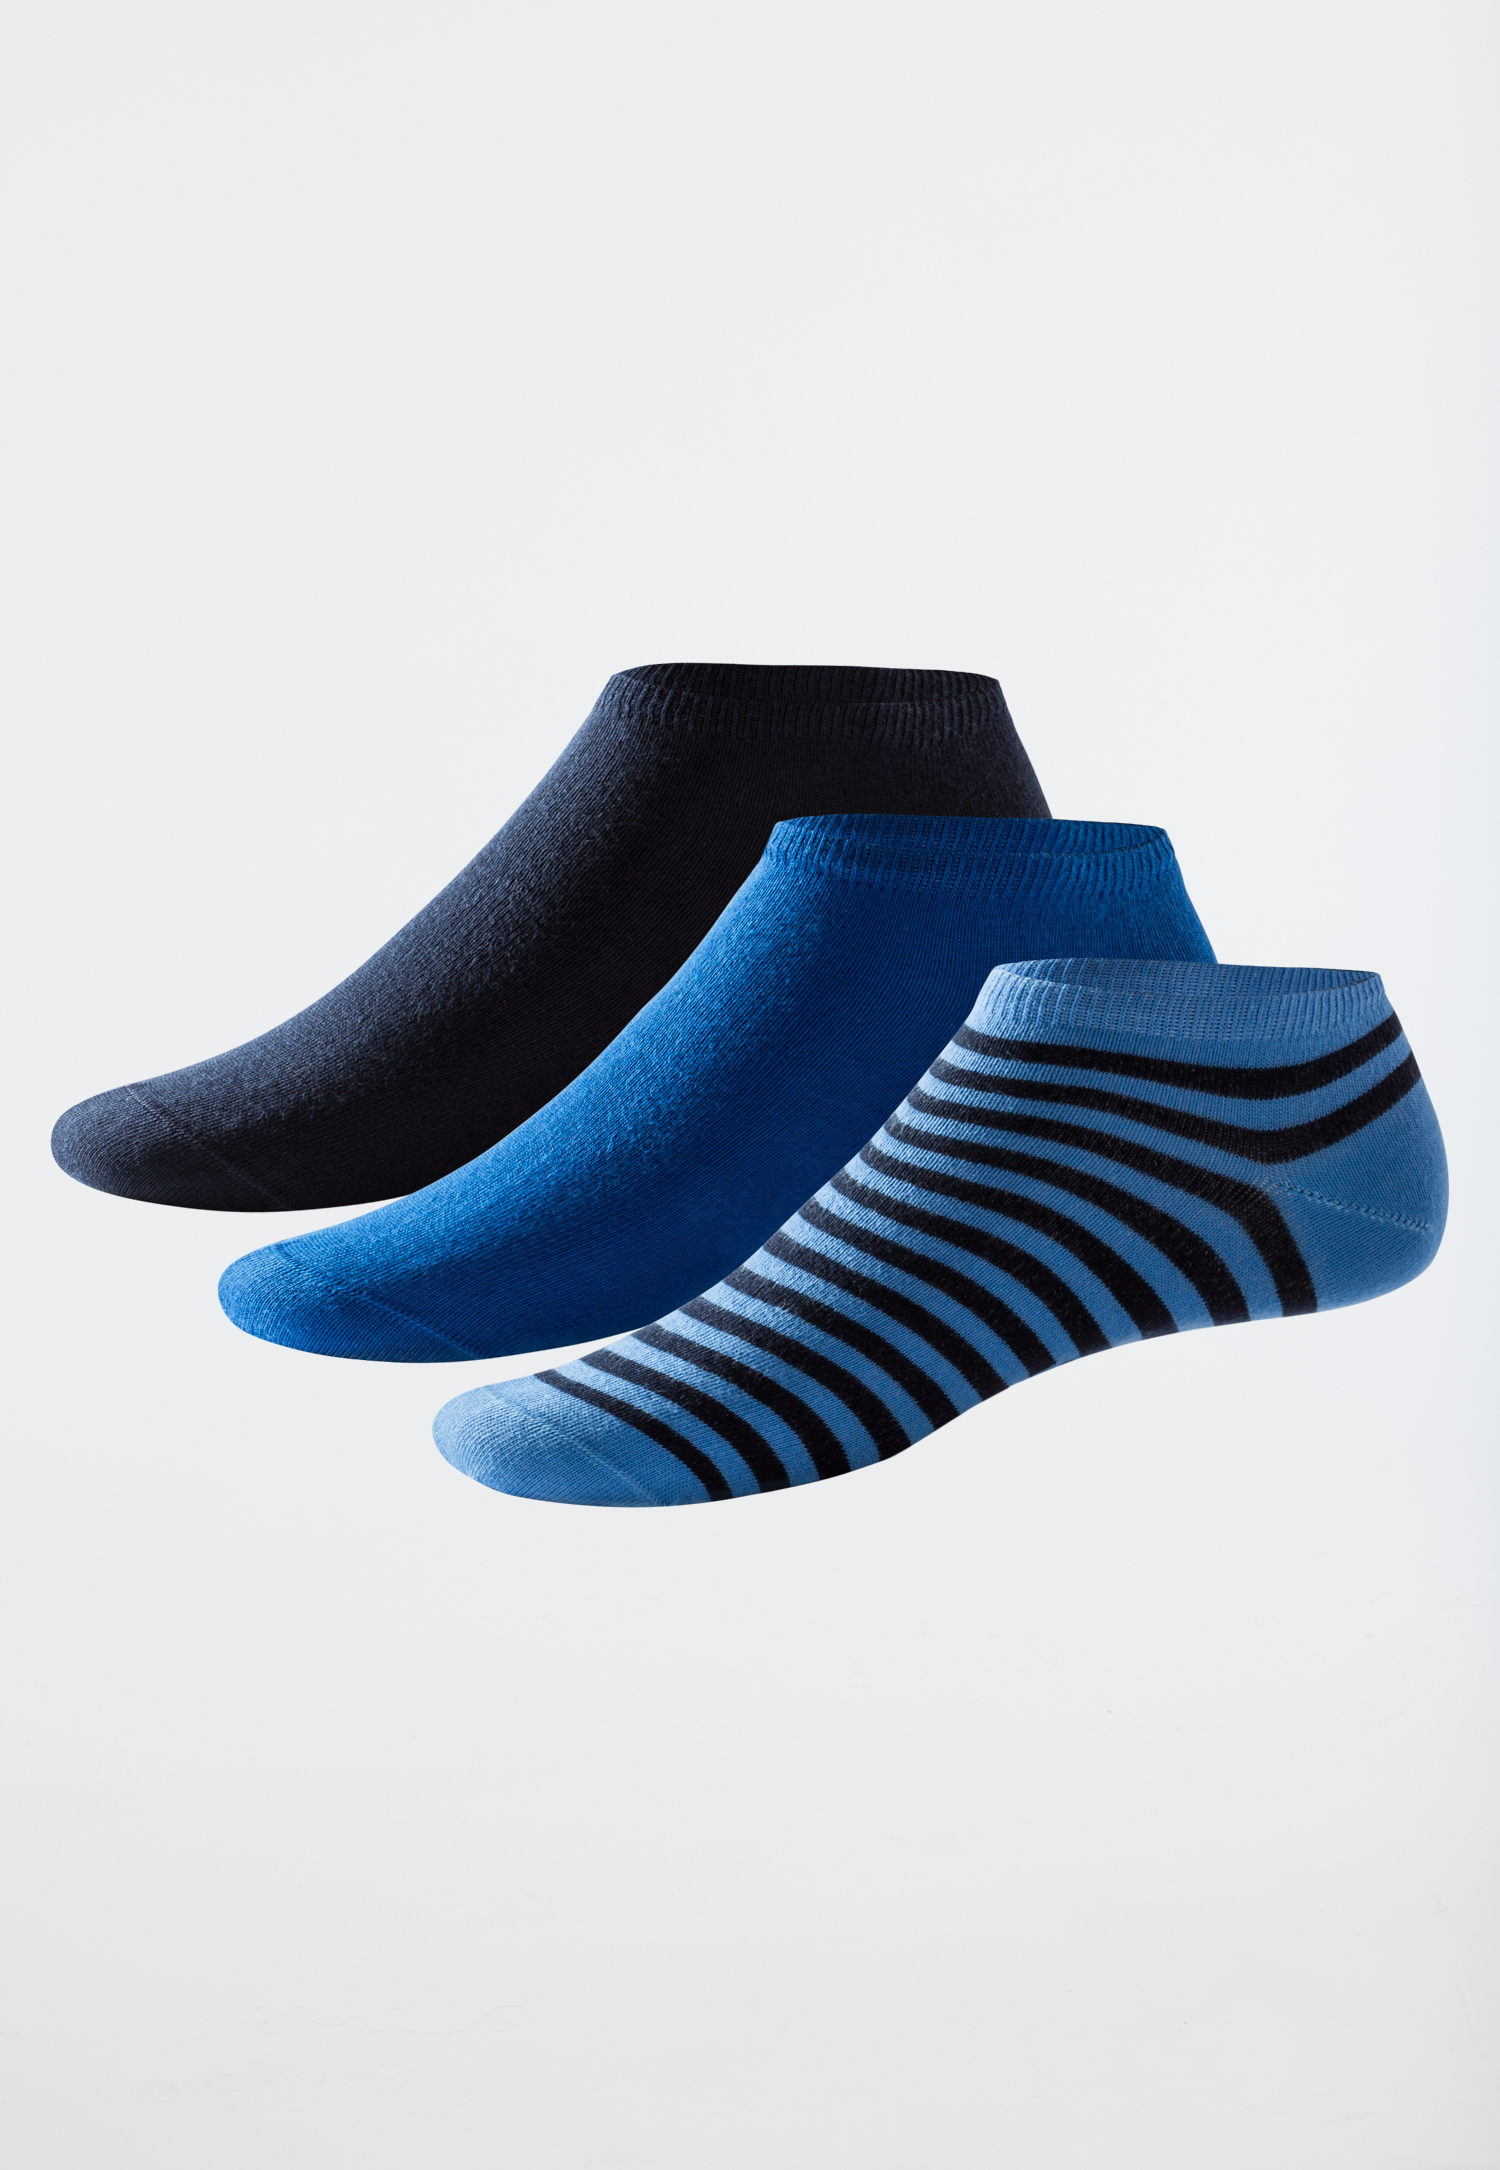 Image of Sneakersocken 3er-Pack stay fresh Streifen blau/dunkelblau - Bluebird 39/42